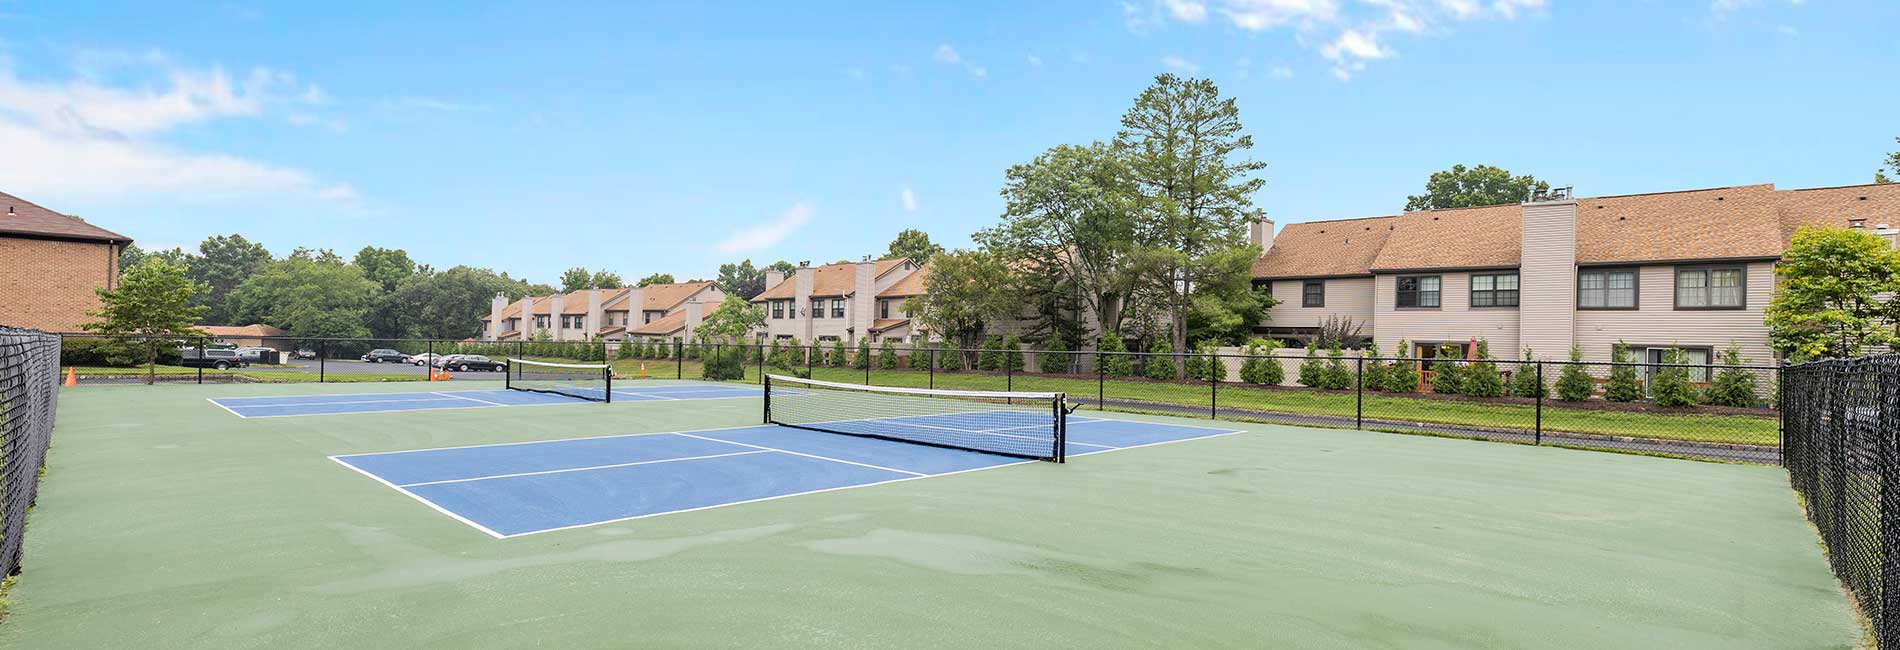 Community Tennis Courts in Princeton Gardens